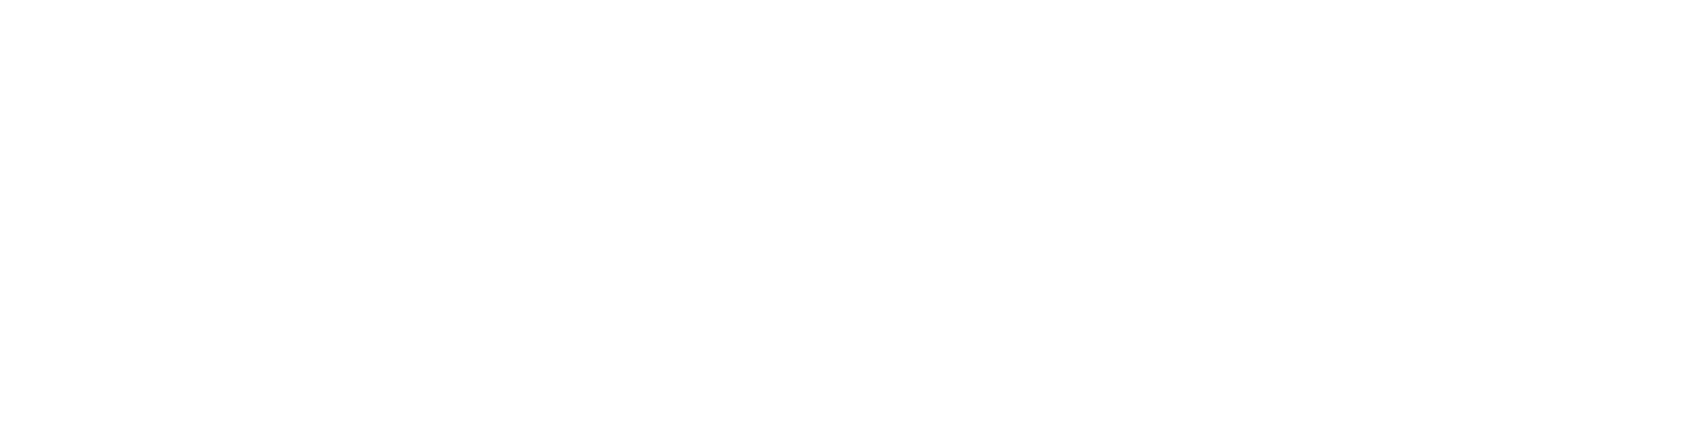 Box.net Logo - Start - Boxnet AB